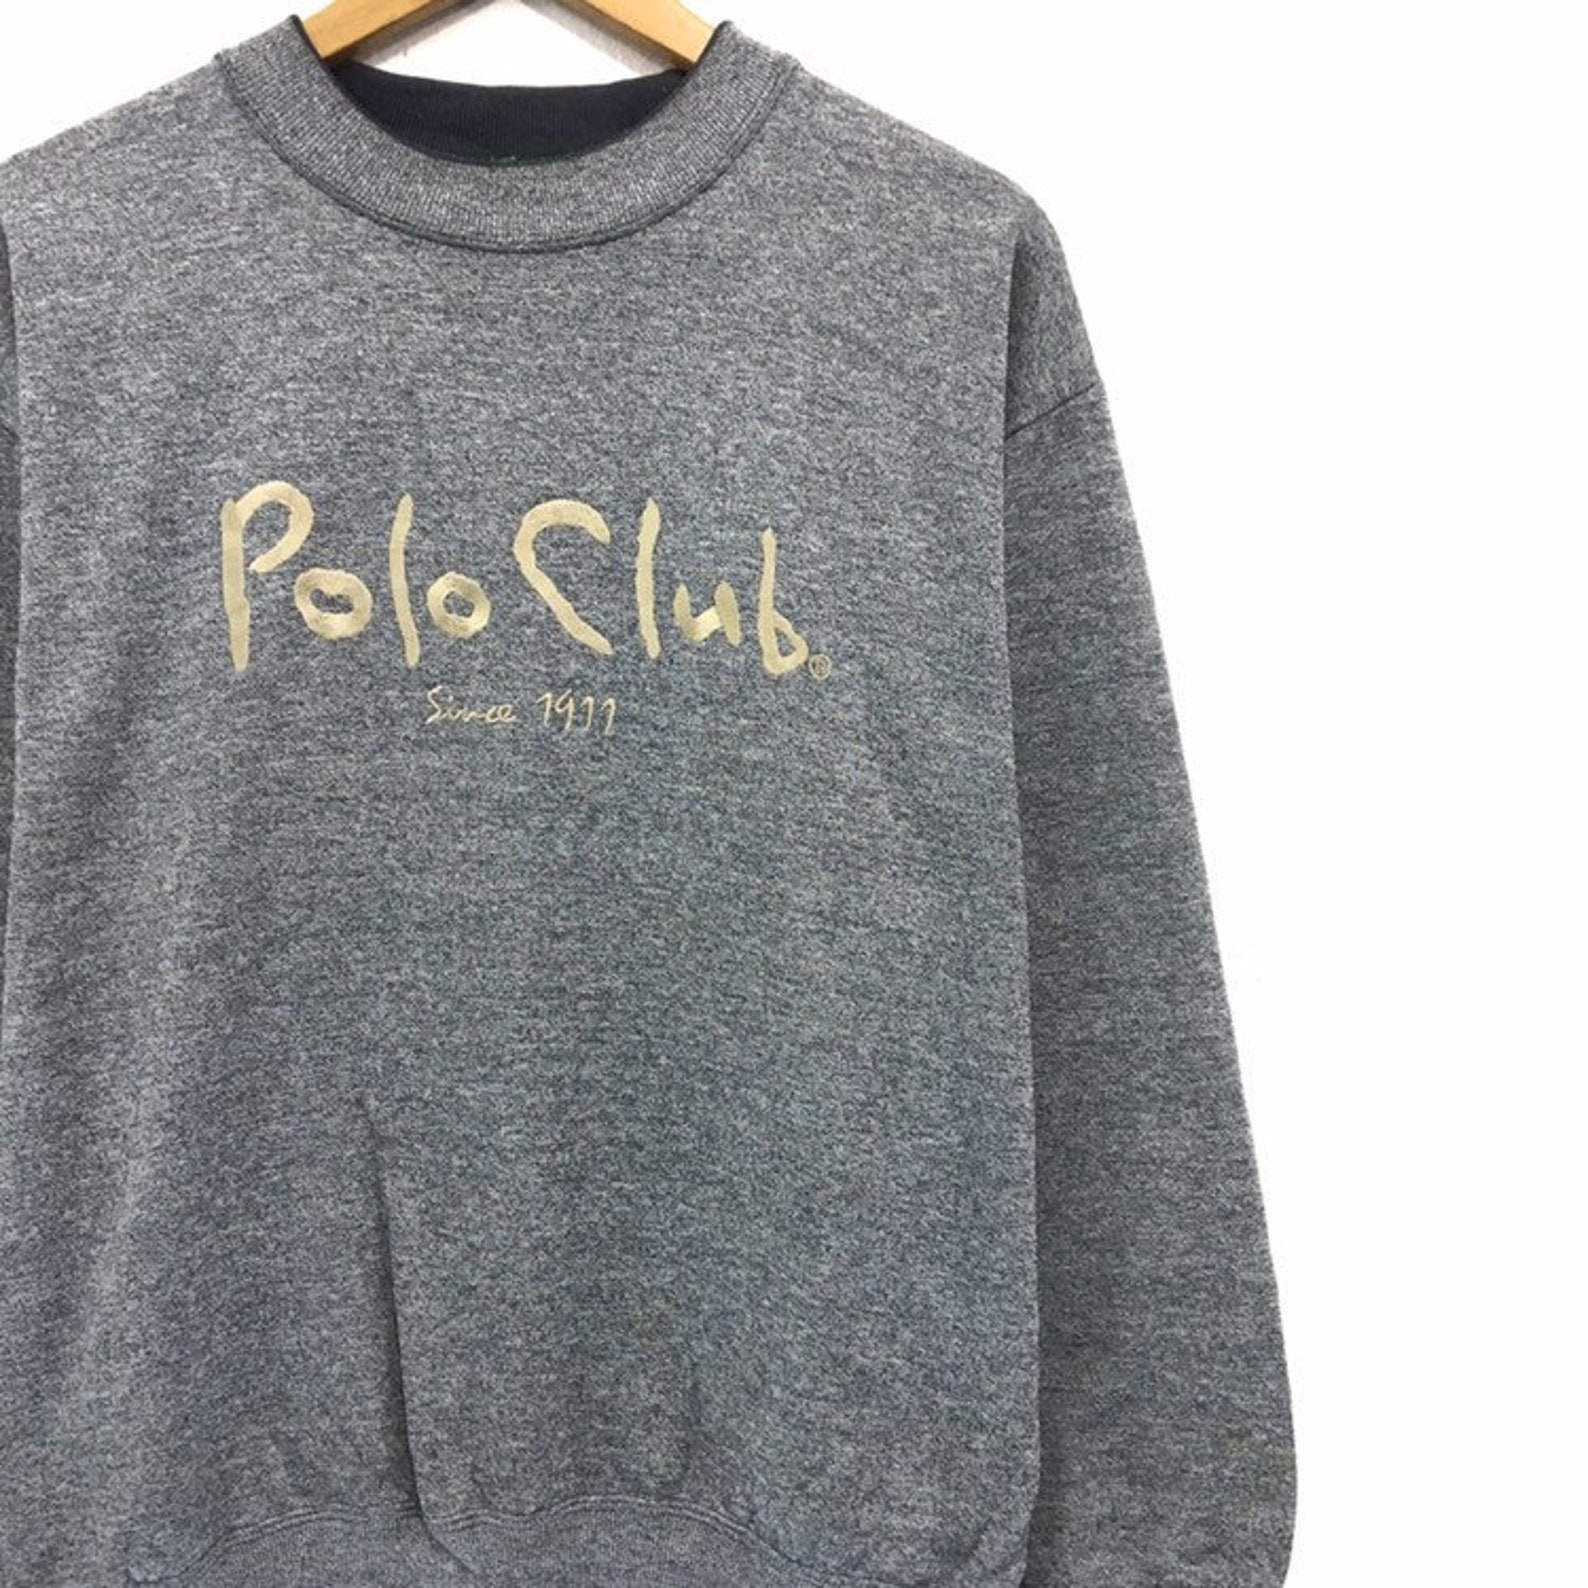 POLO CLUB Crewneck Sweatshirt Jumper Embroidery Big Logo Spell | Etsy